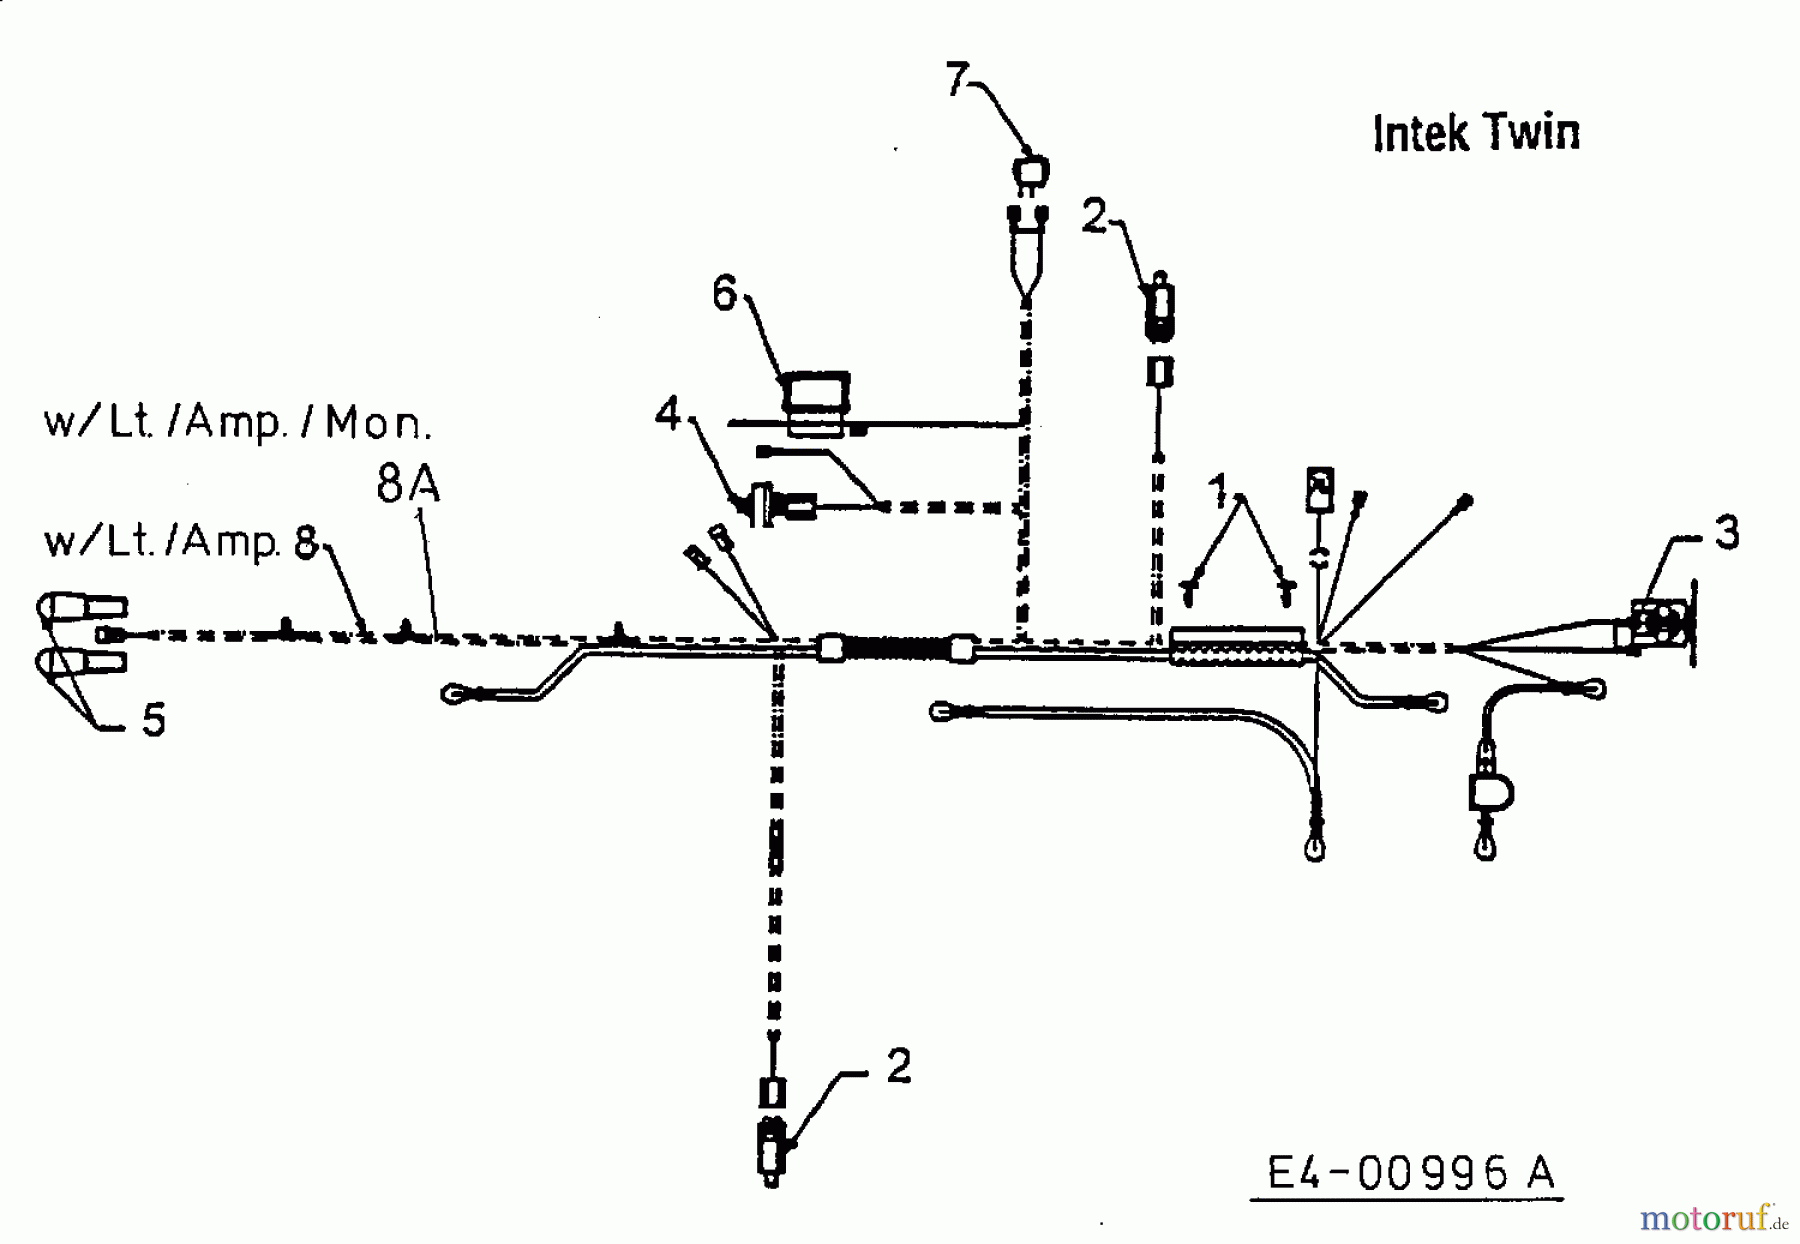  Yard-Man Lawn tractors HG 6145 13AP694G643  (1998) Wiring diagram Intek Twin